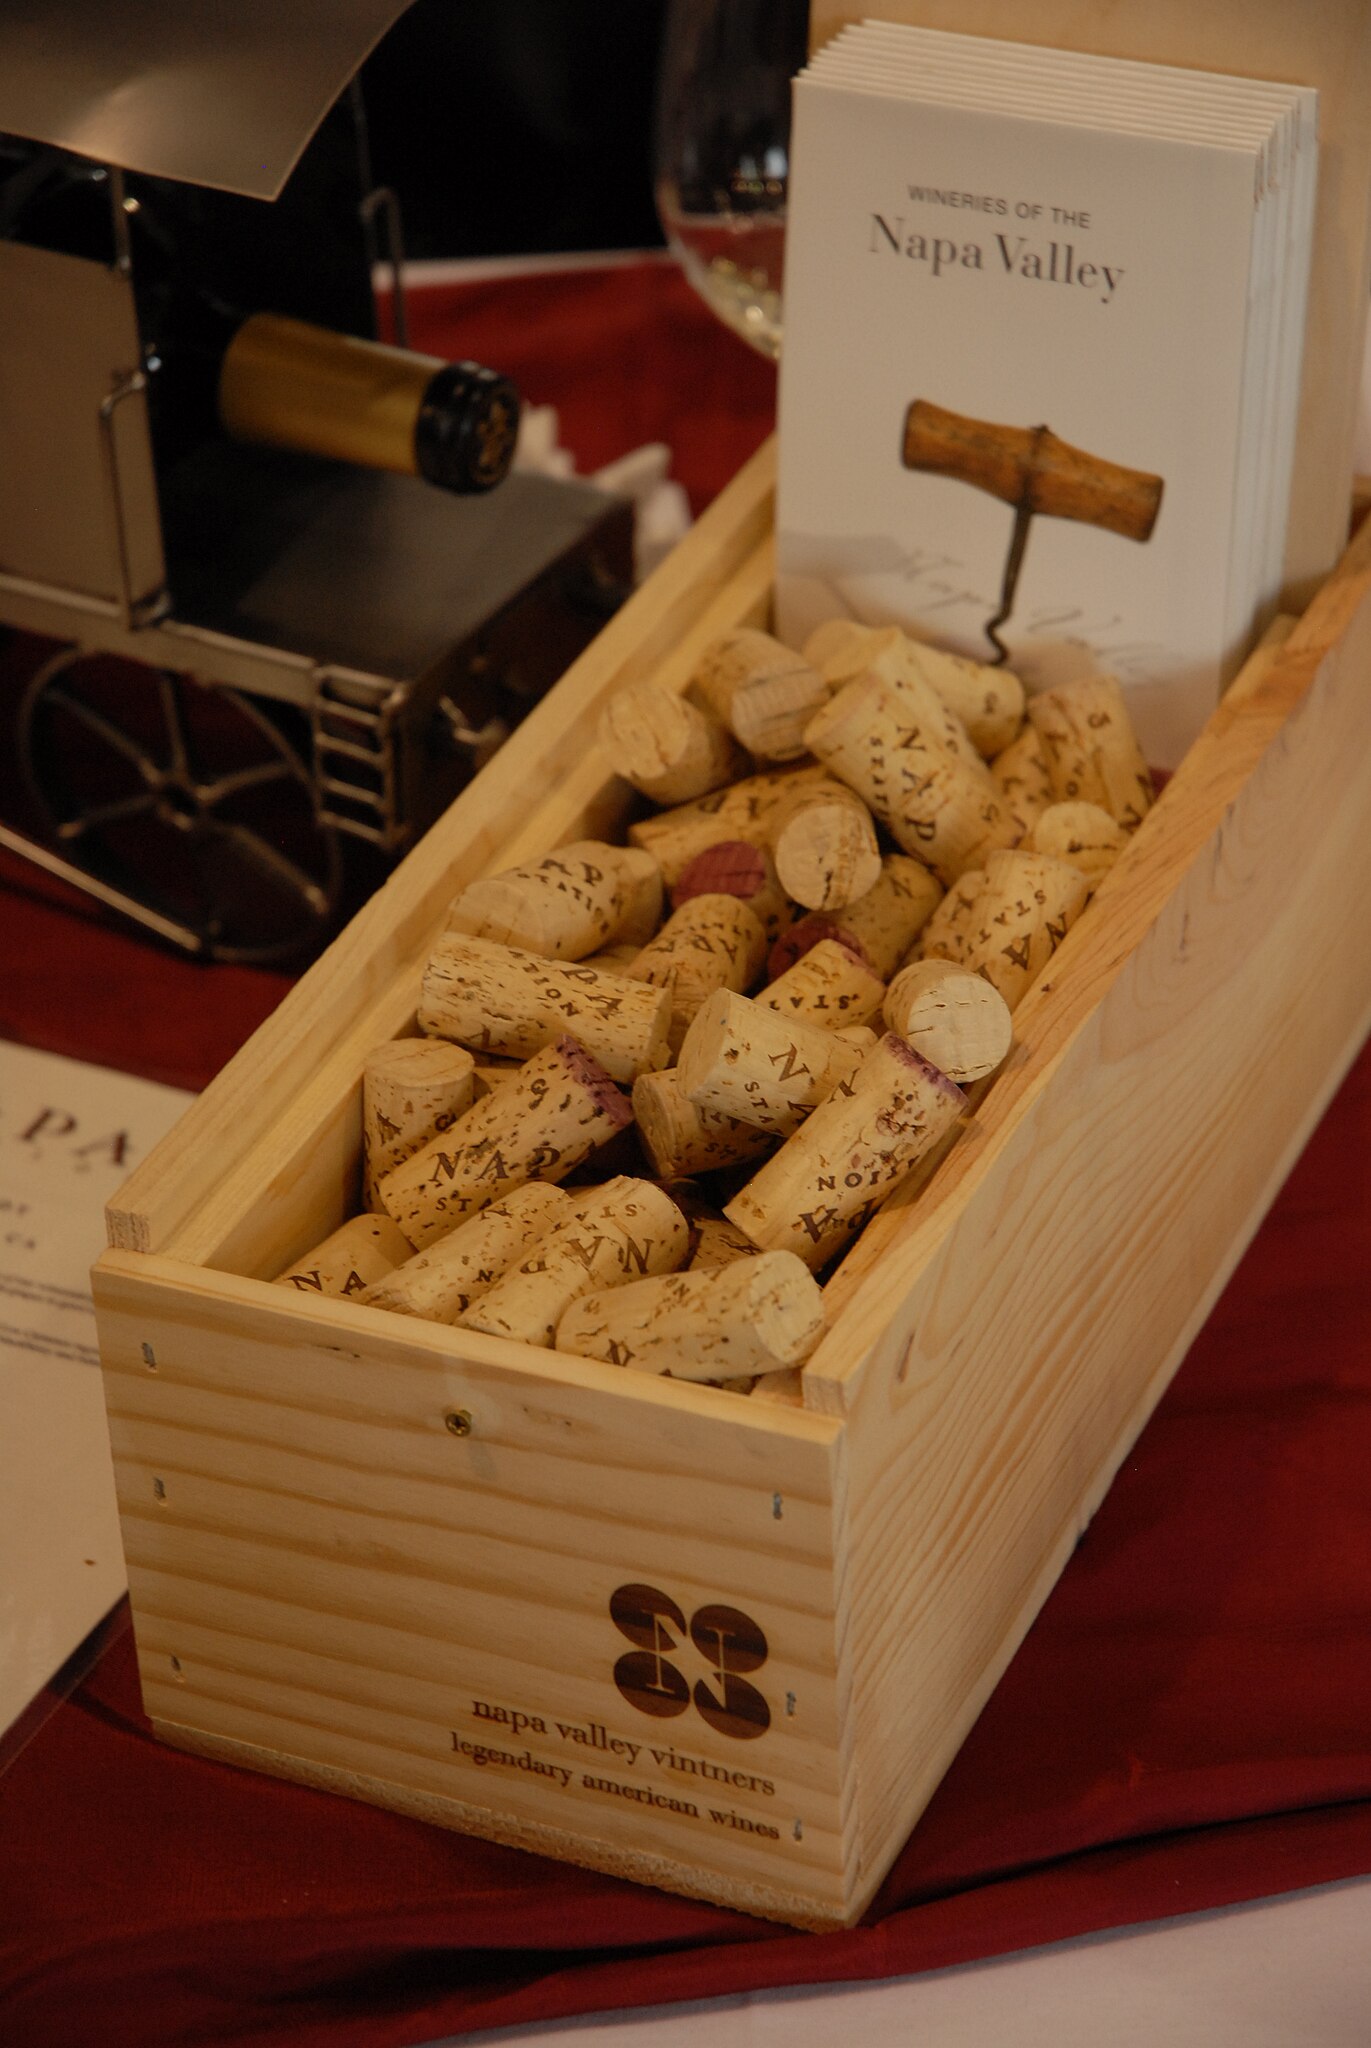 Wine cork - Wikipedia